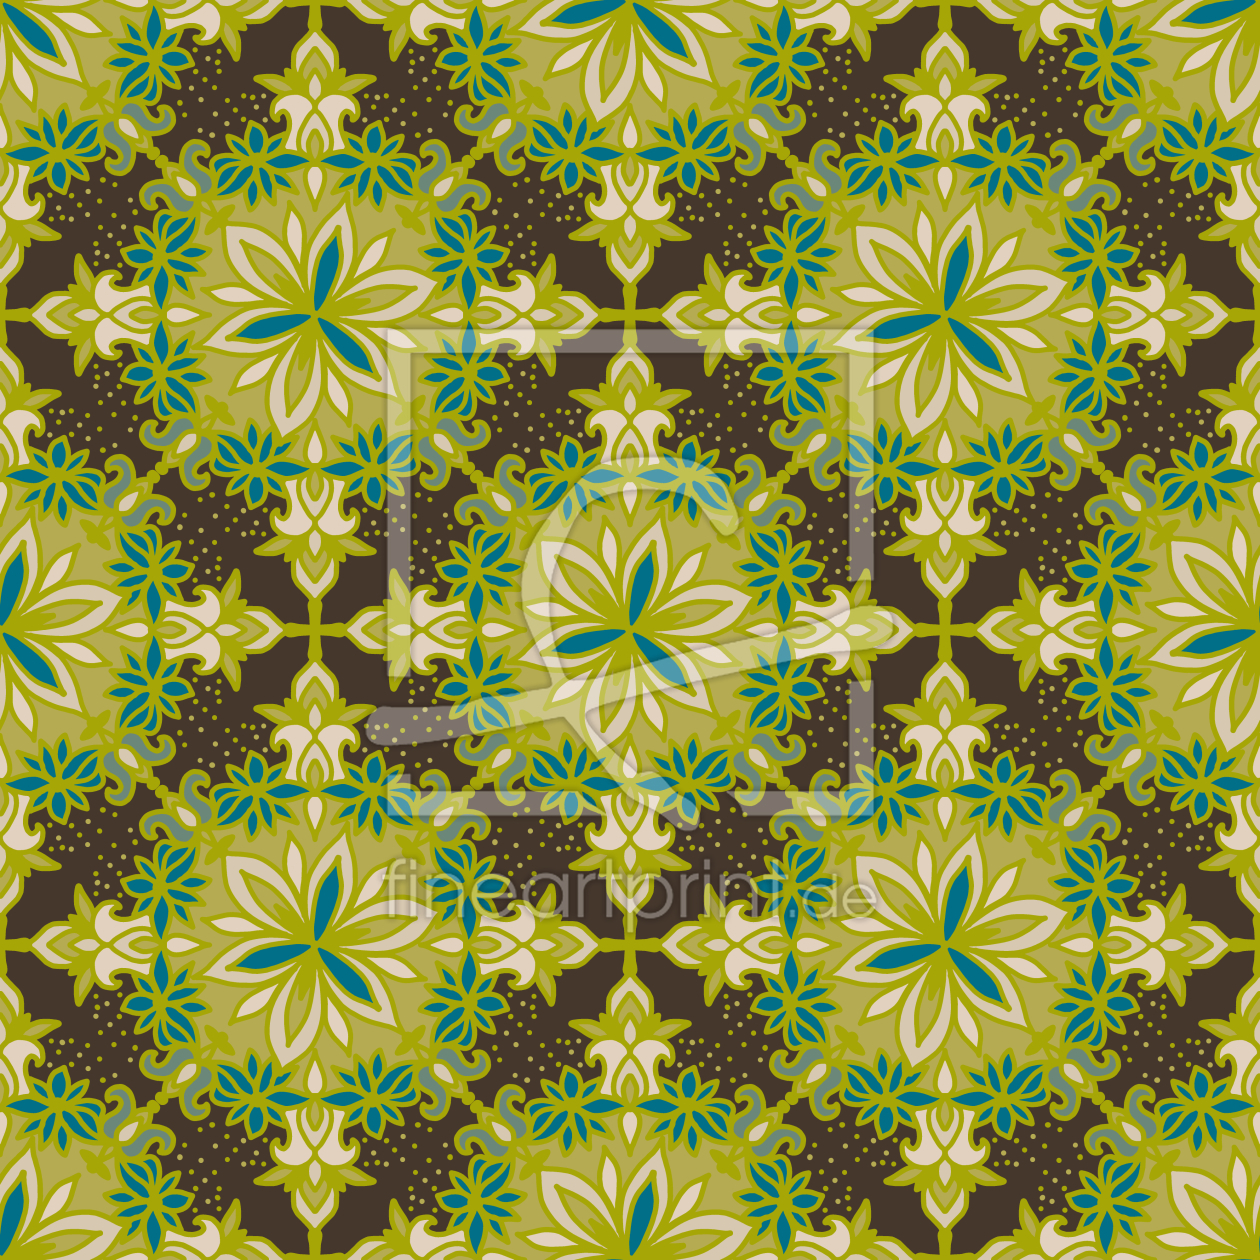 Bild-Nr.: 9011948 Hexagon Mandala erstellt von patterndesigns-com